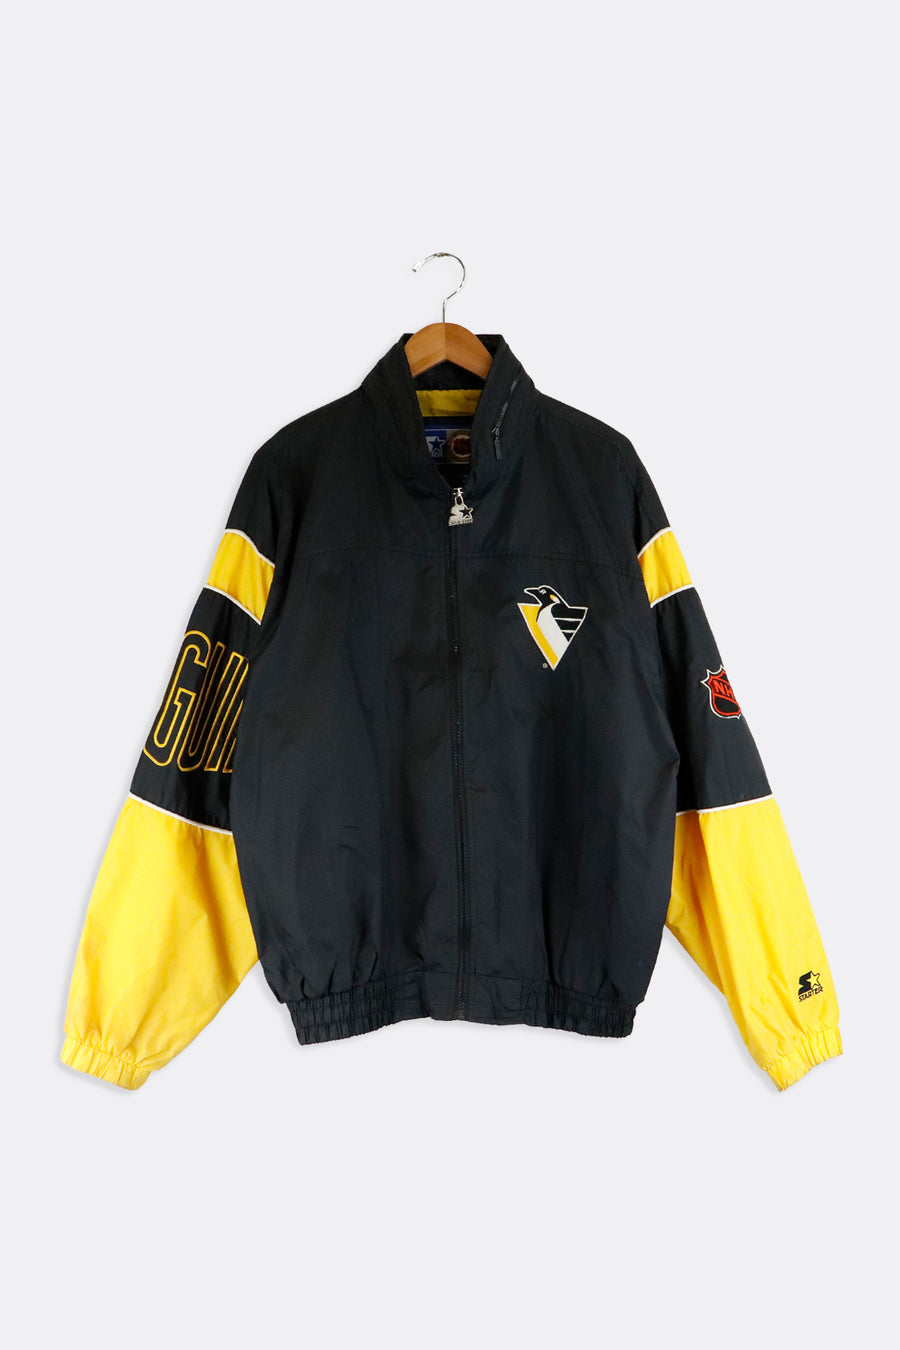 Pittsburgh Penguins NHL Black and Yellow Varsity Jacket